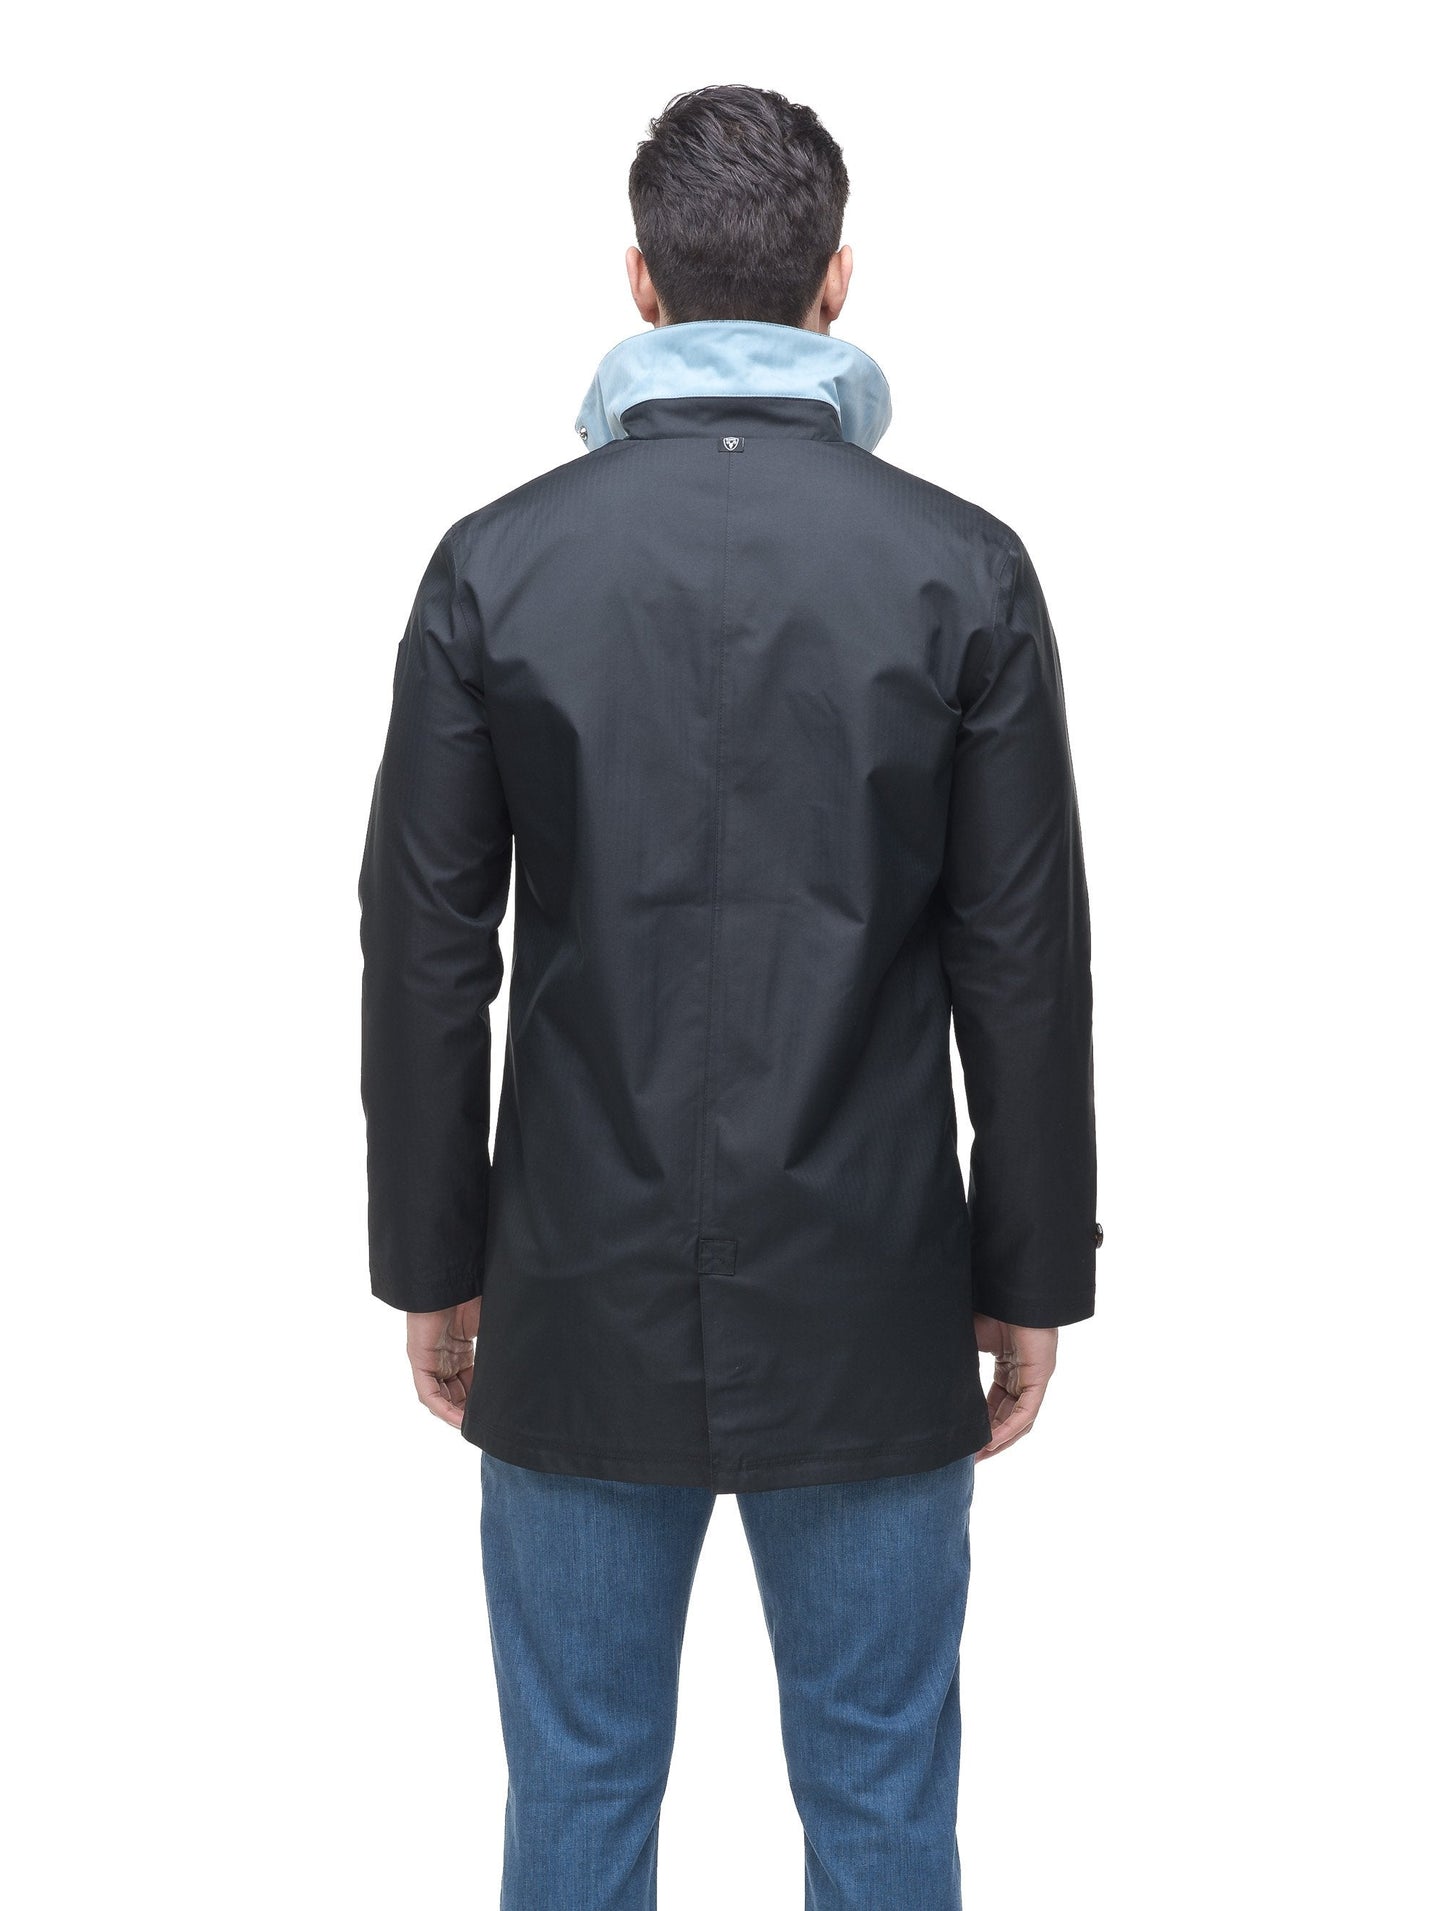 Men's Macintosh style raincoat in Black